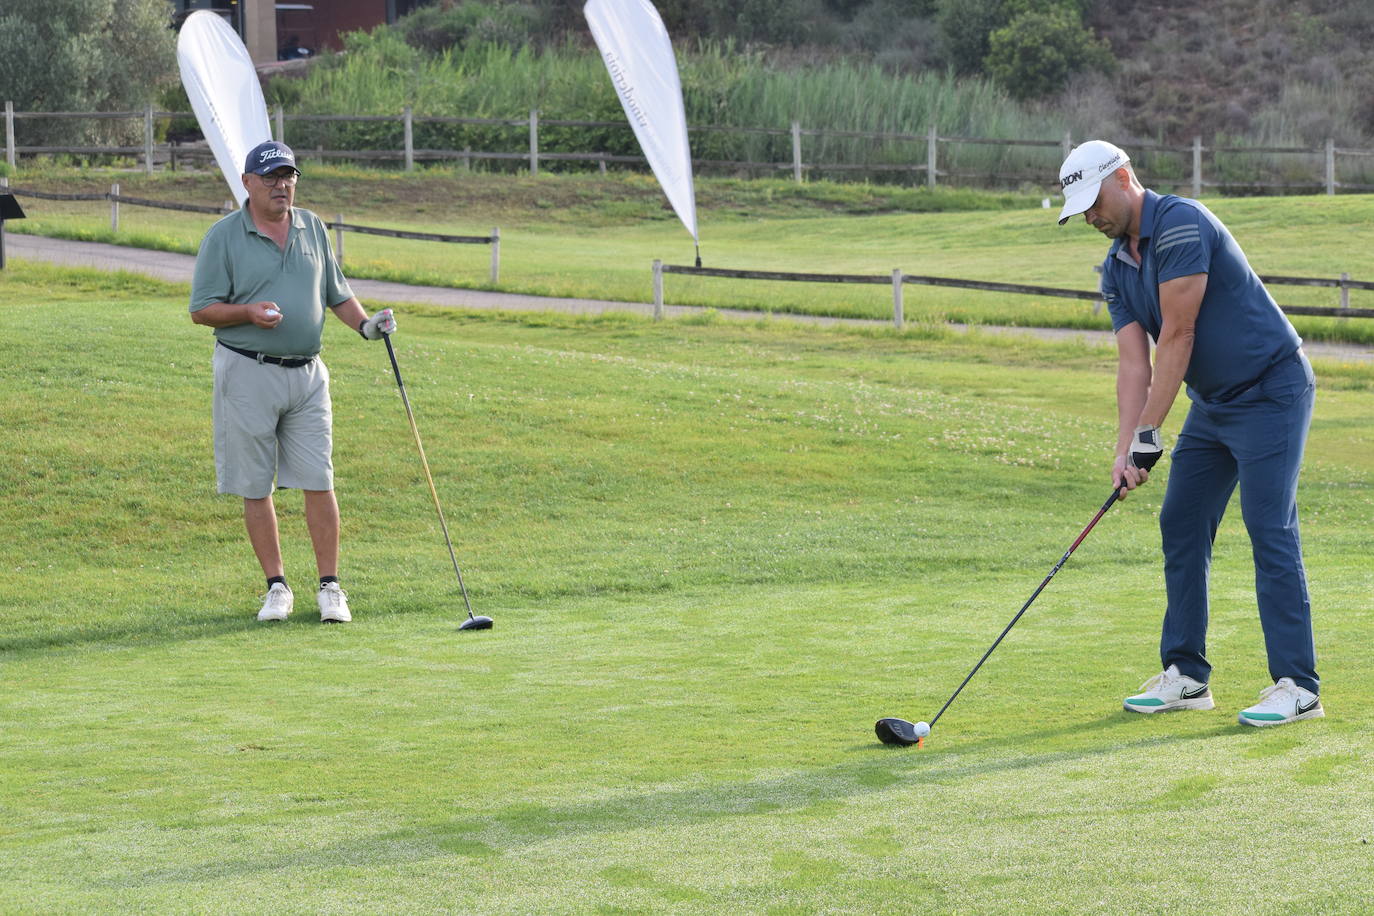 Montecillo potagoniza Torneos de Golf &#039;Rioja&amp;Vino&#039;